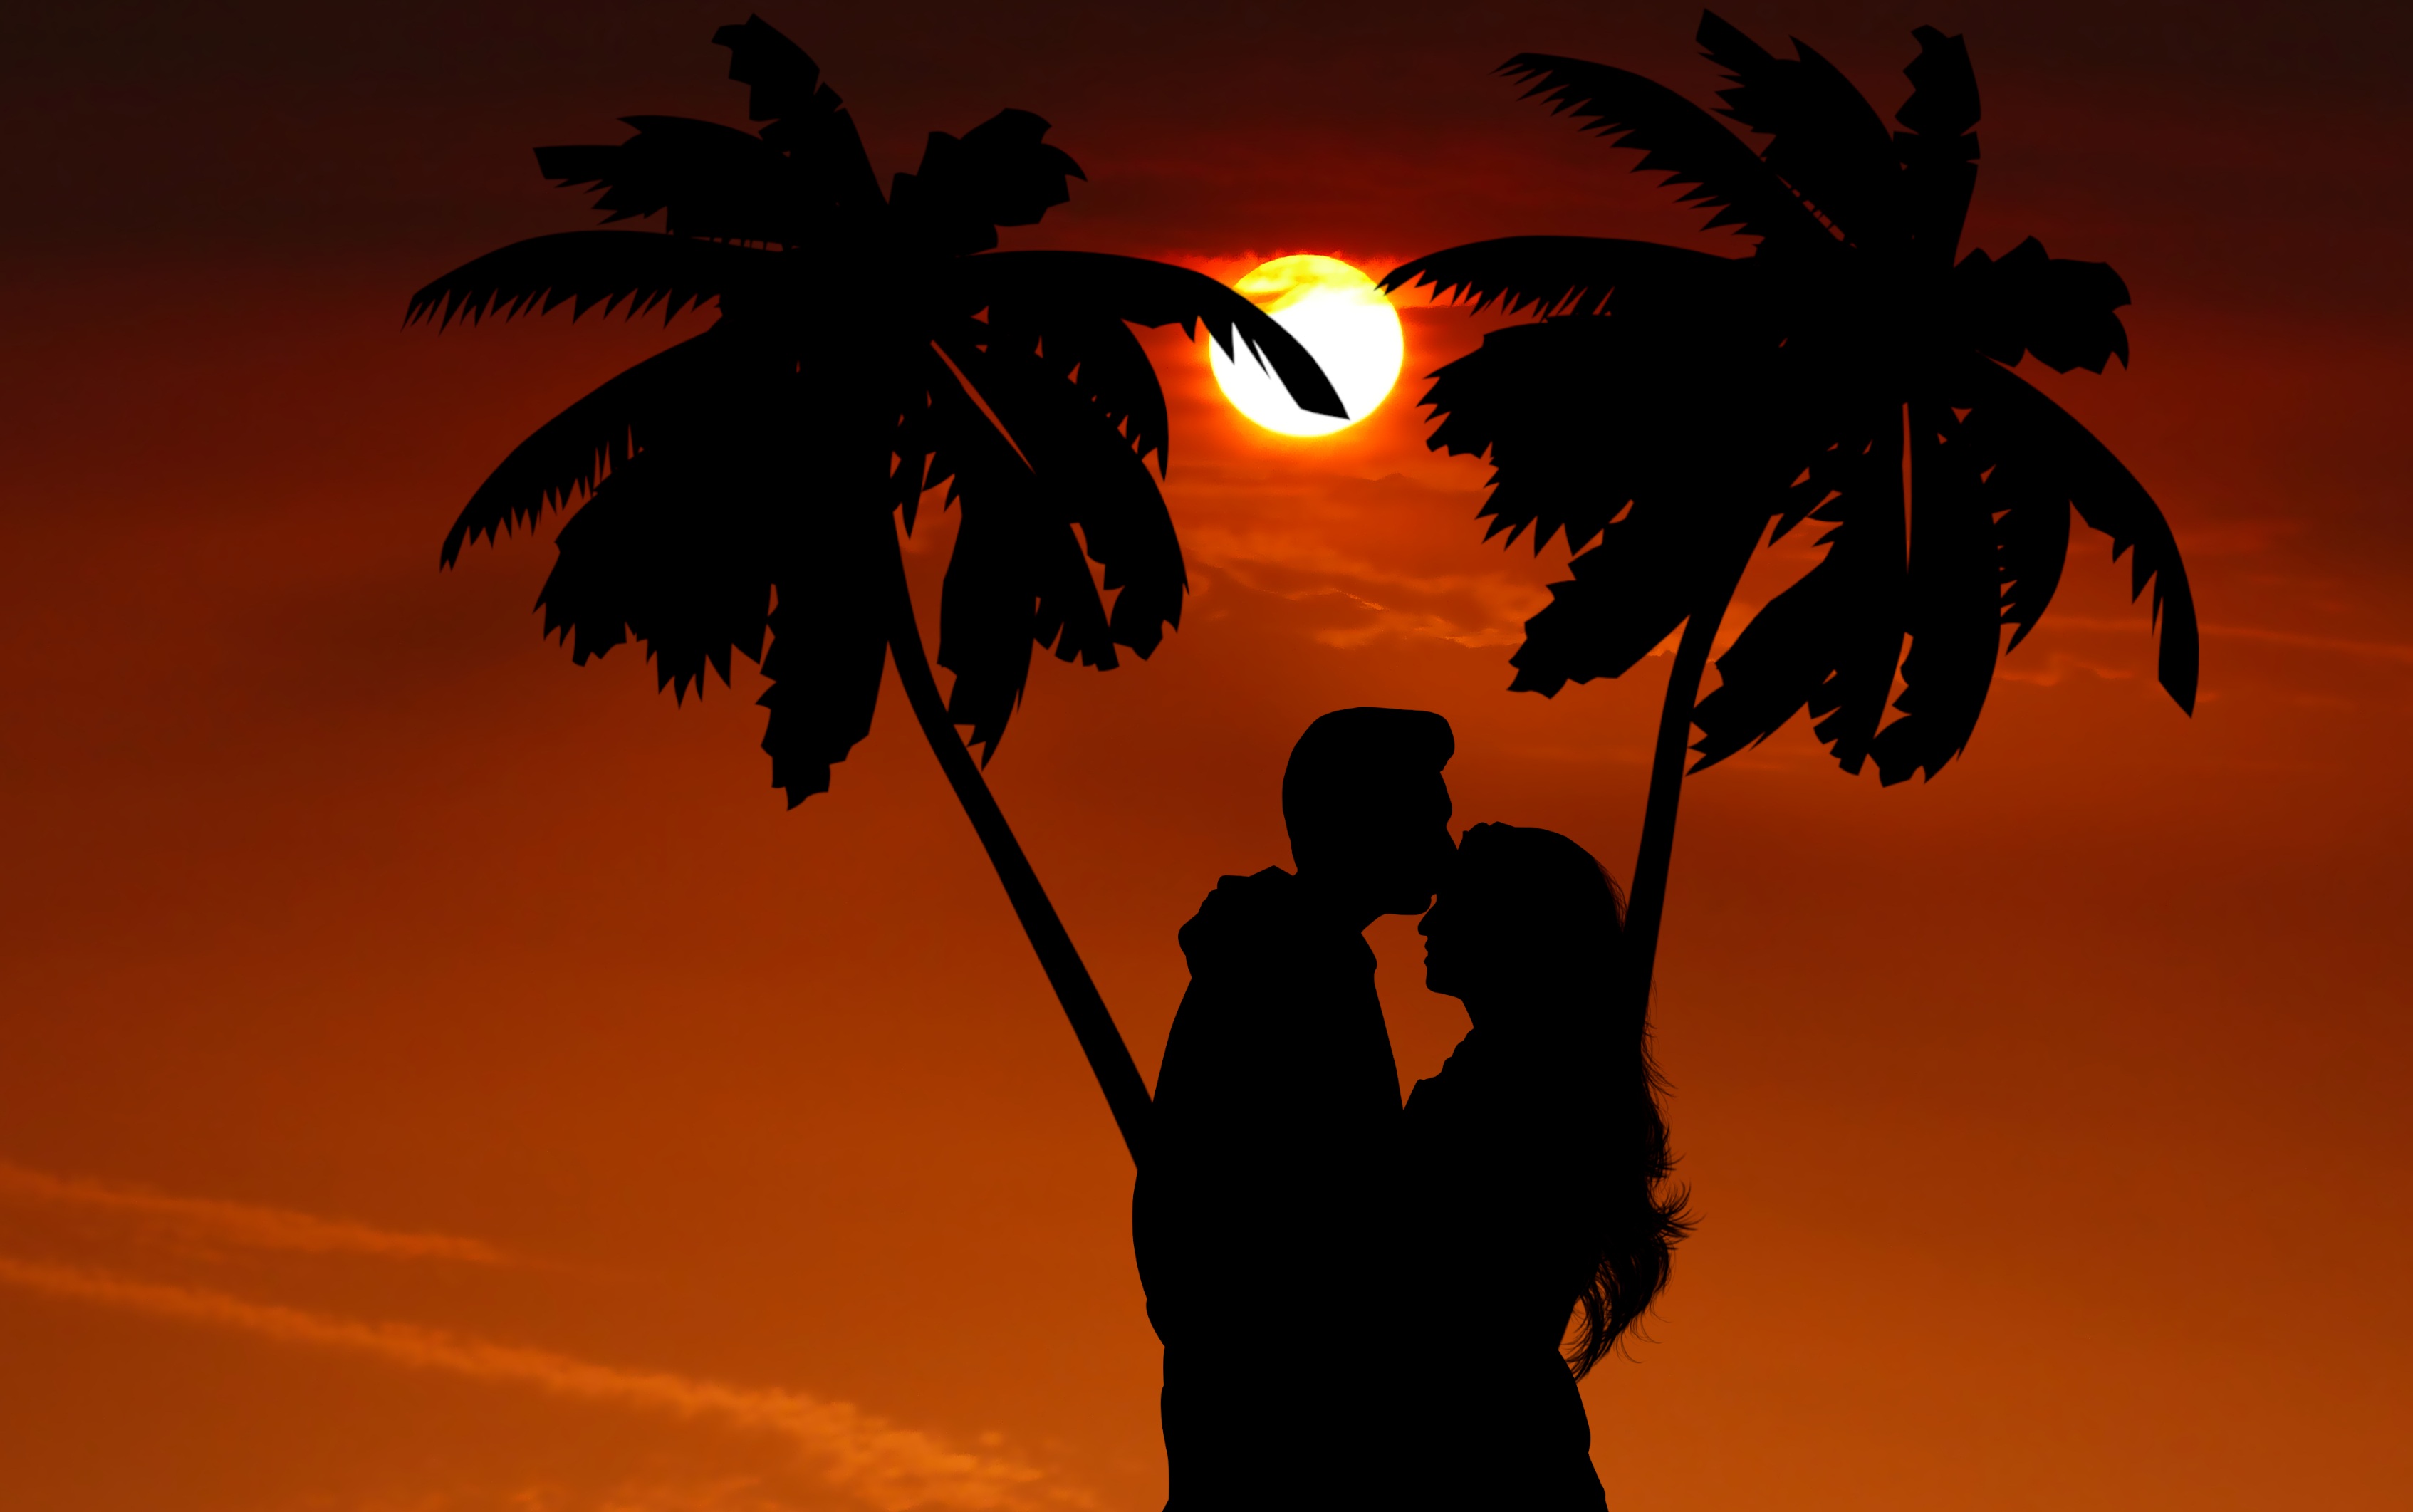 couple, romance, love, silhouettes, embrace, pair, night, palms